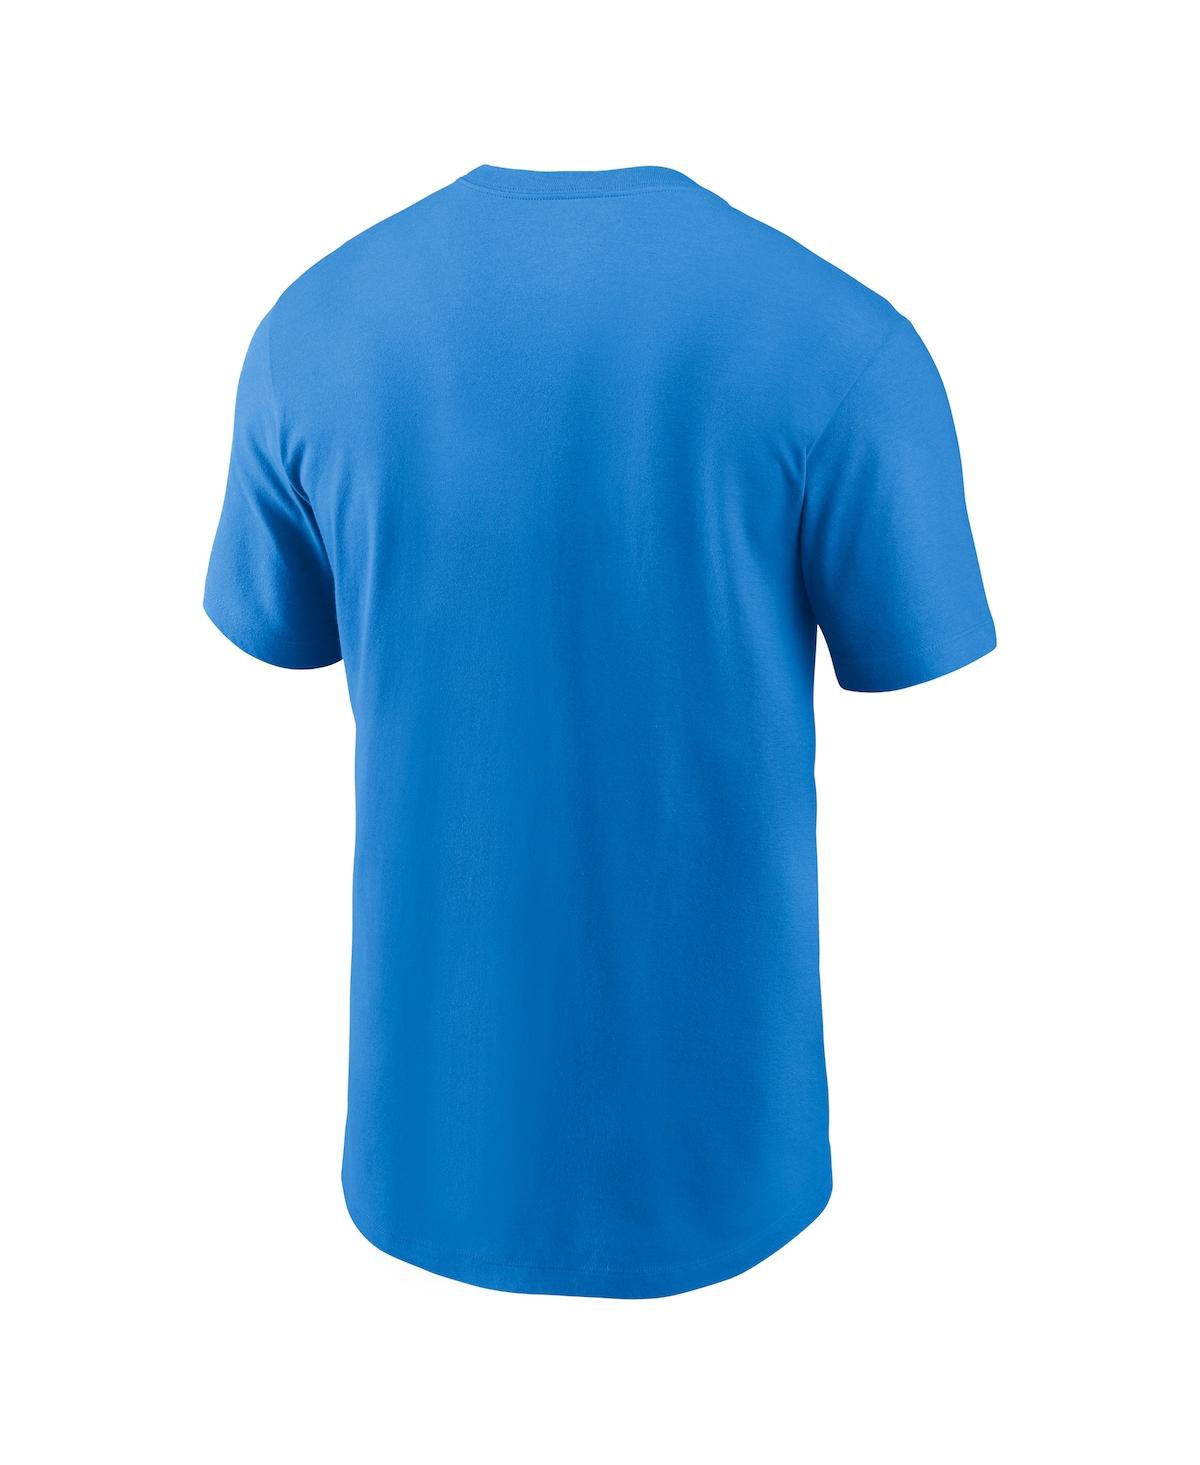 Shop Nike Men's  Powder Blue Los Angeles Chargers Local Essential T-shirt